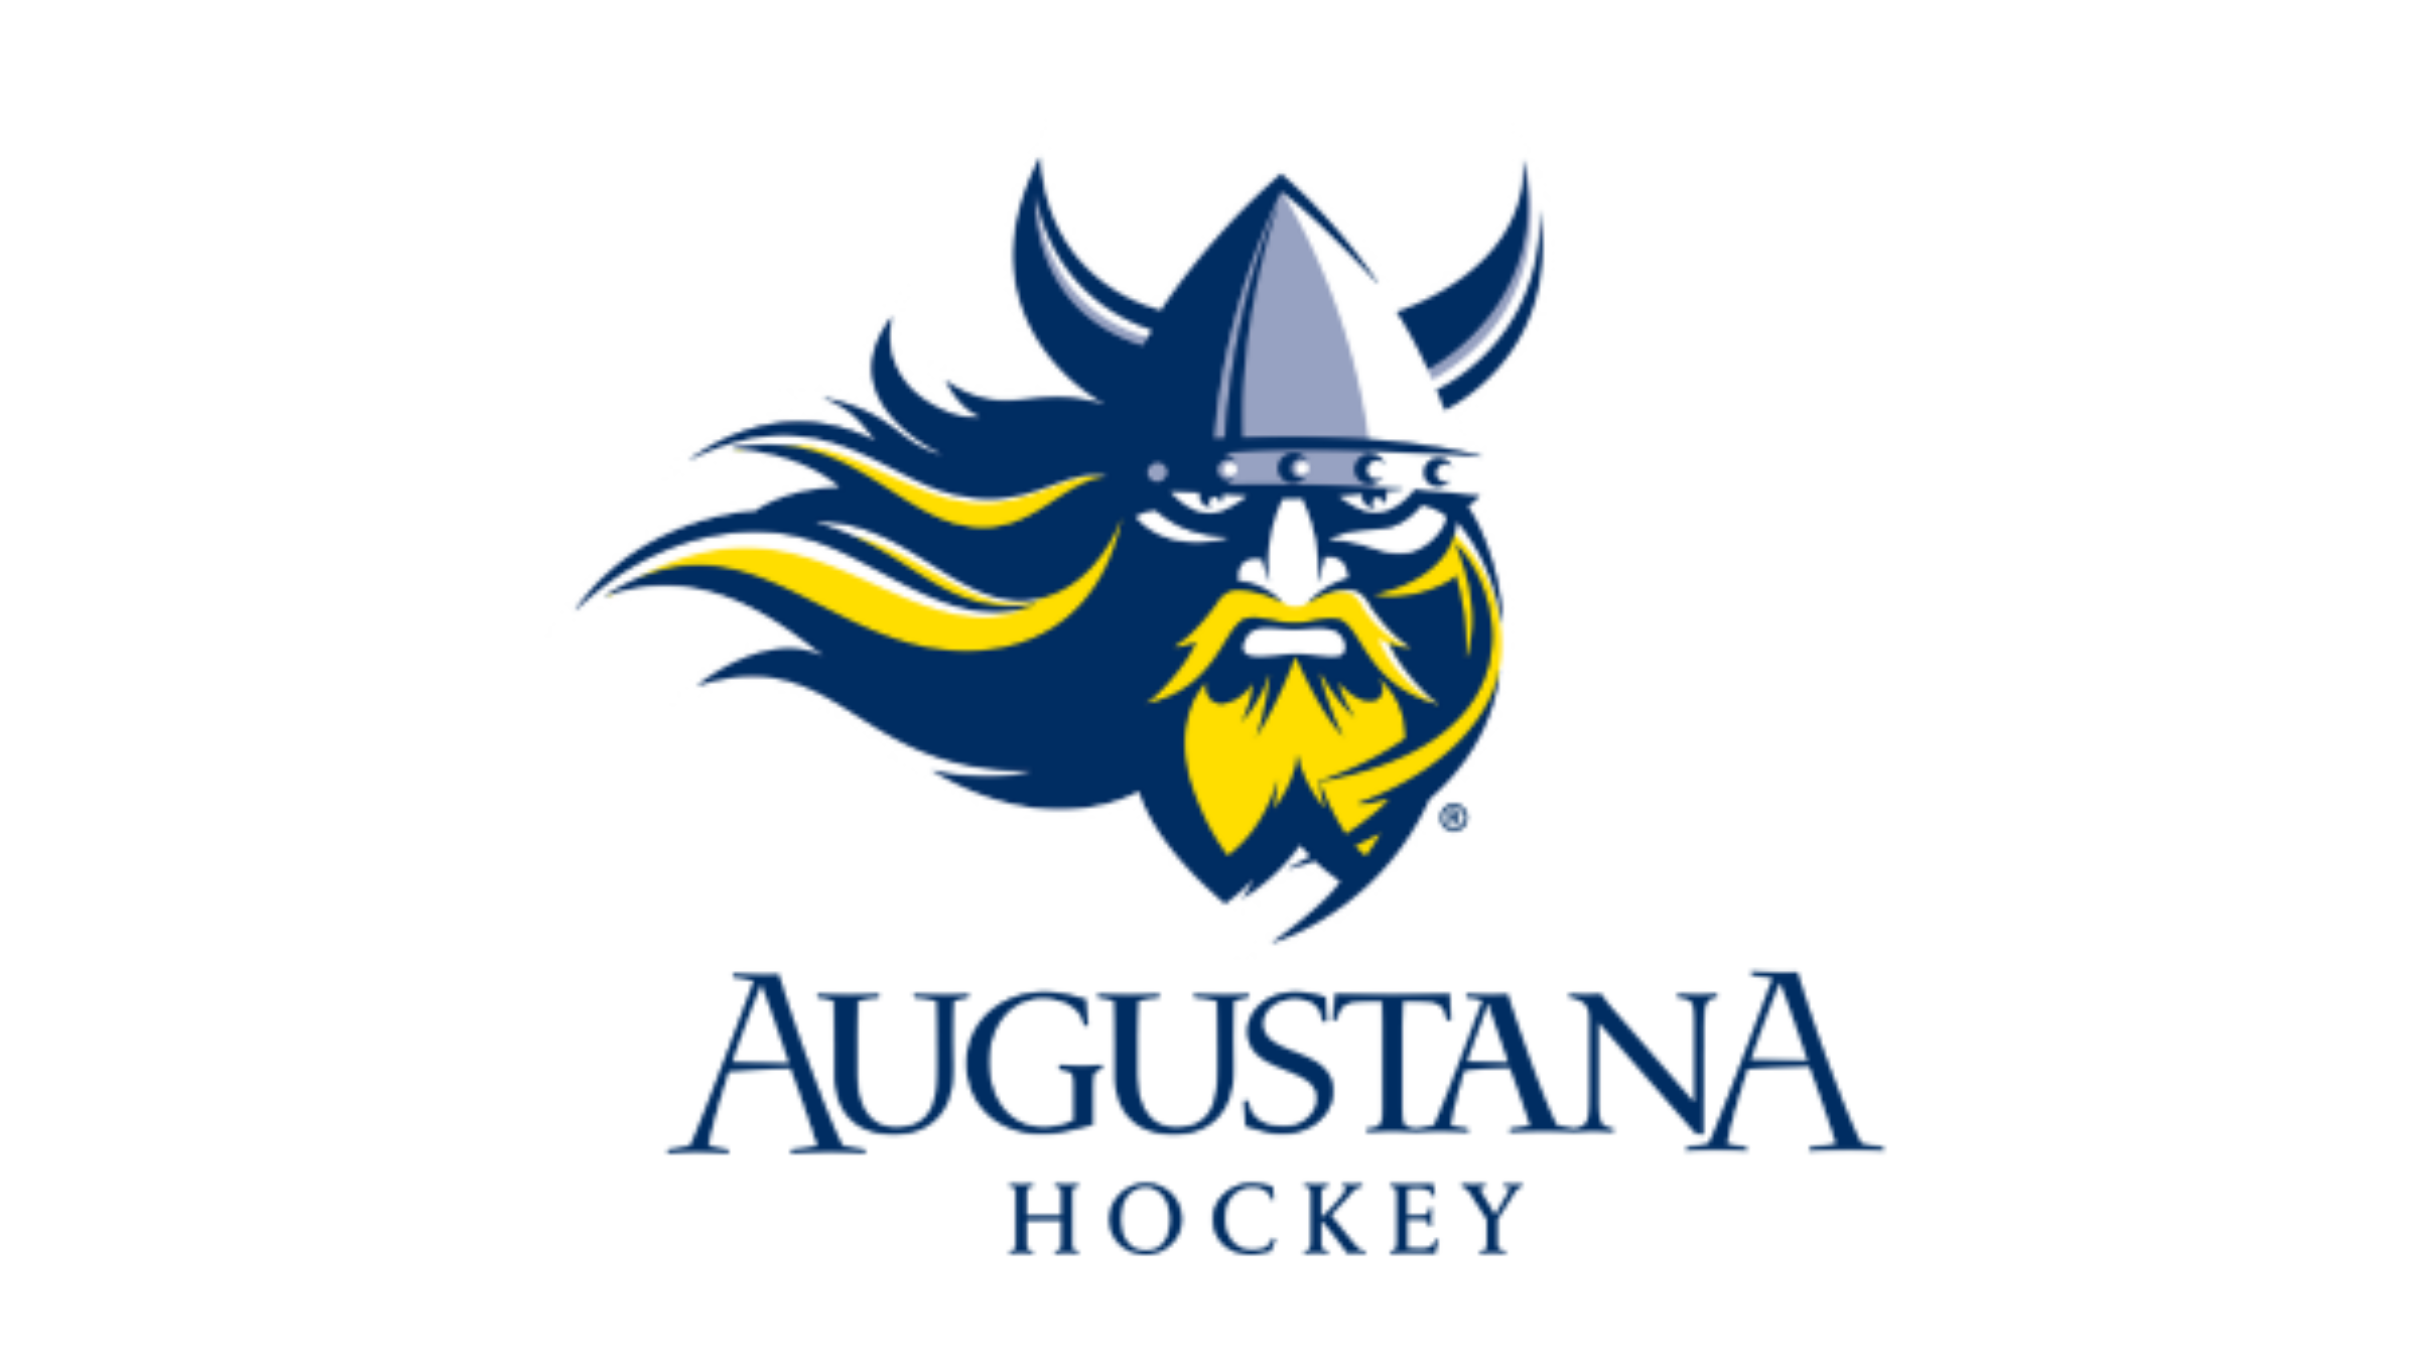 Augustana University Hockey presale information on freepresalepasswords.com